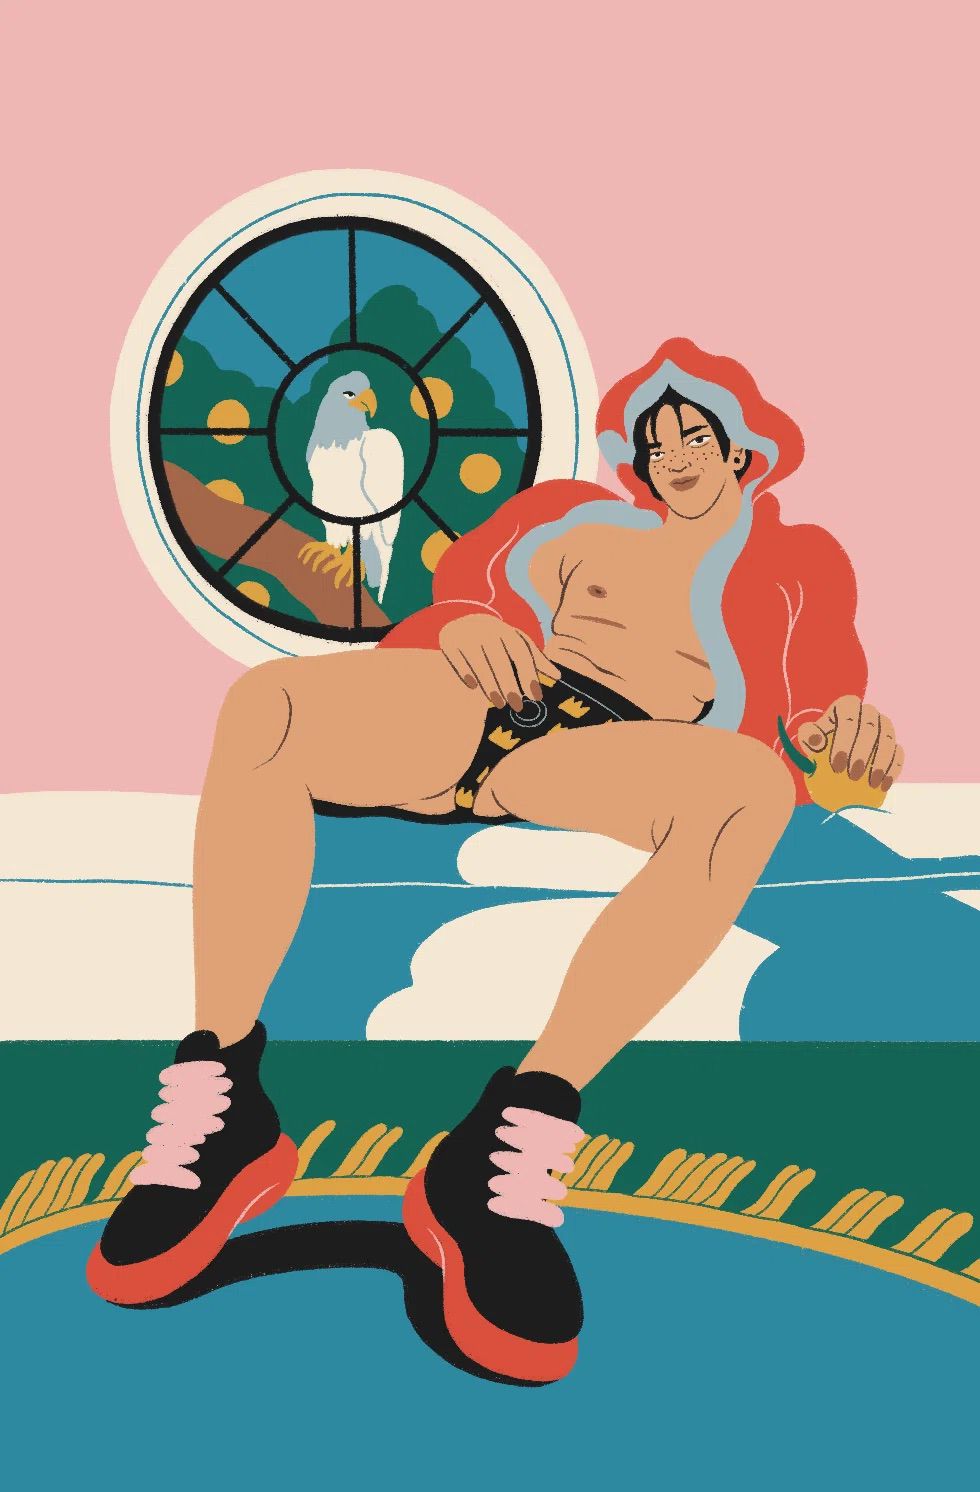 Erotic Tarot by Sophie Birkin